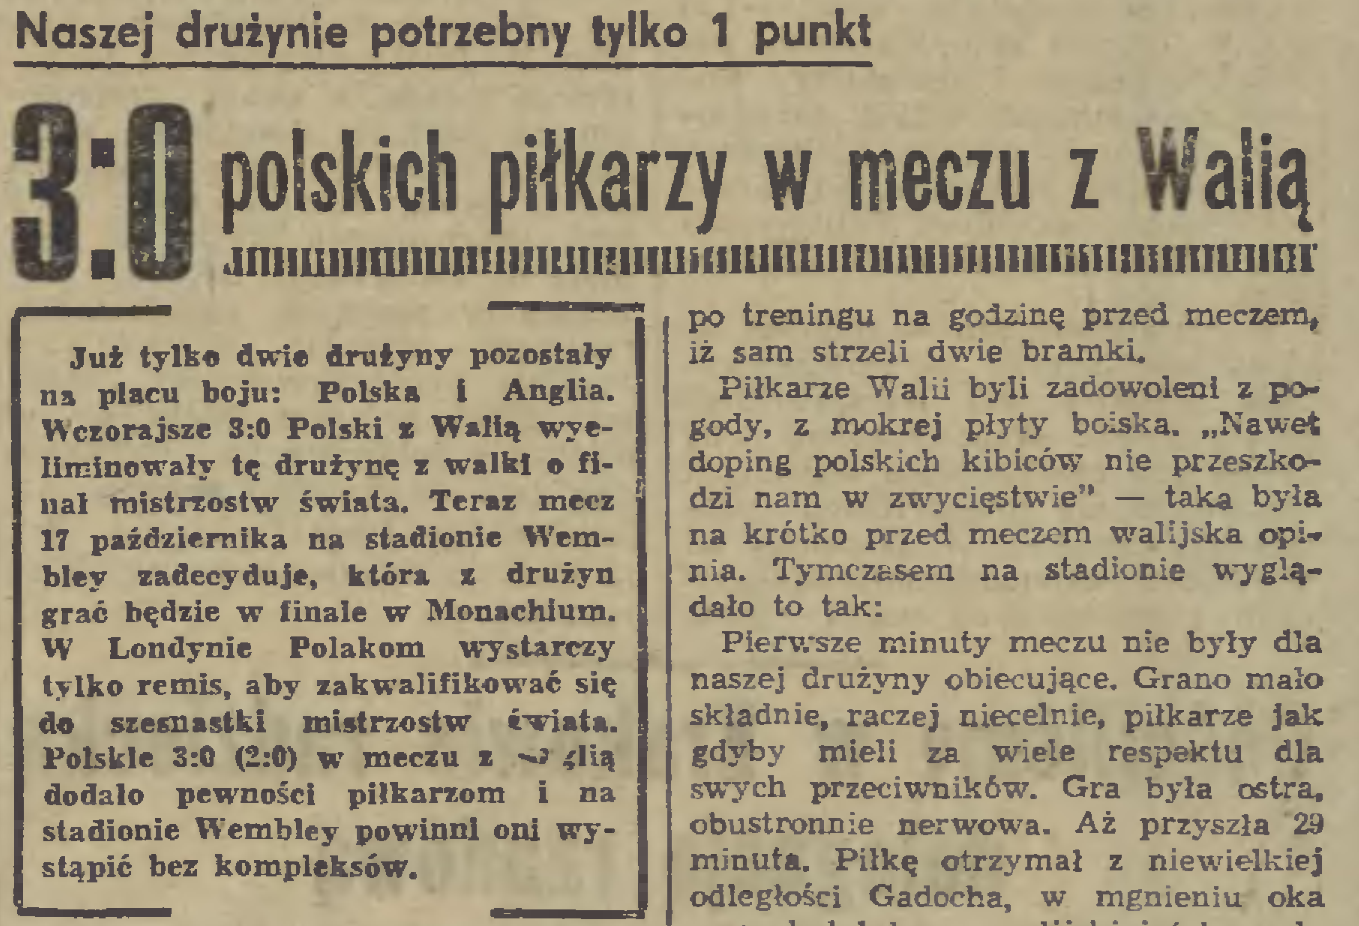 Polska-Walia 1973 3-0